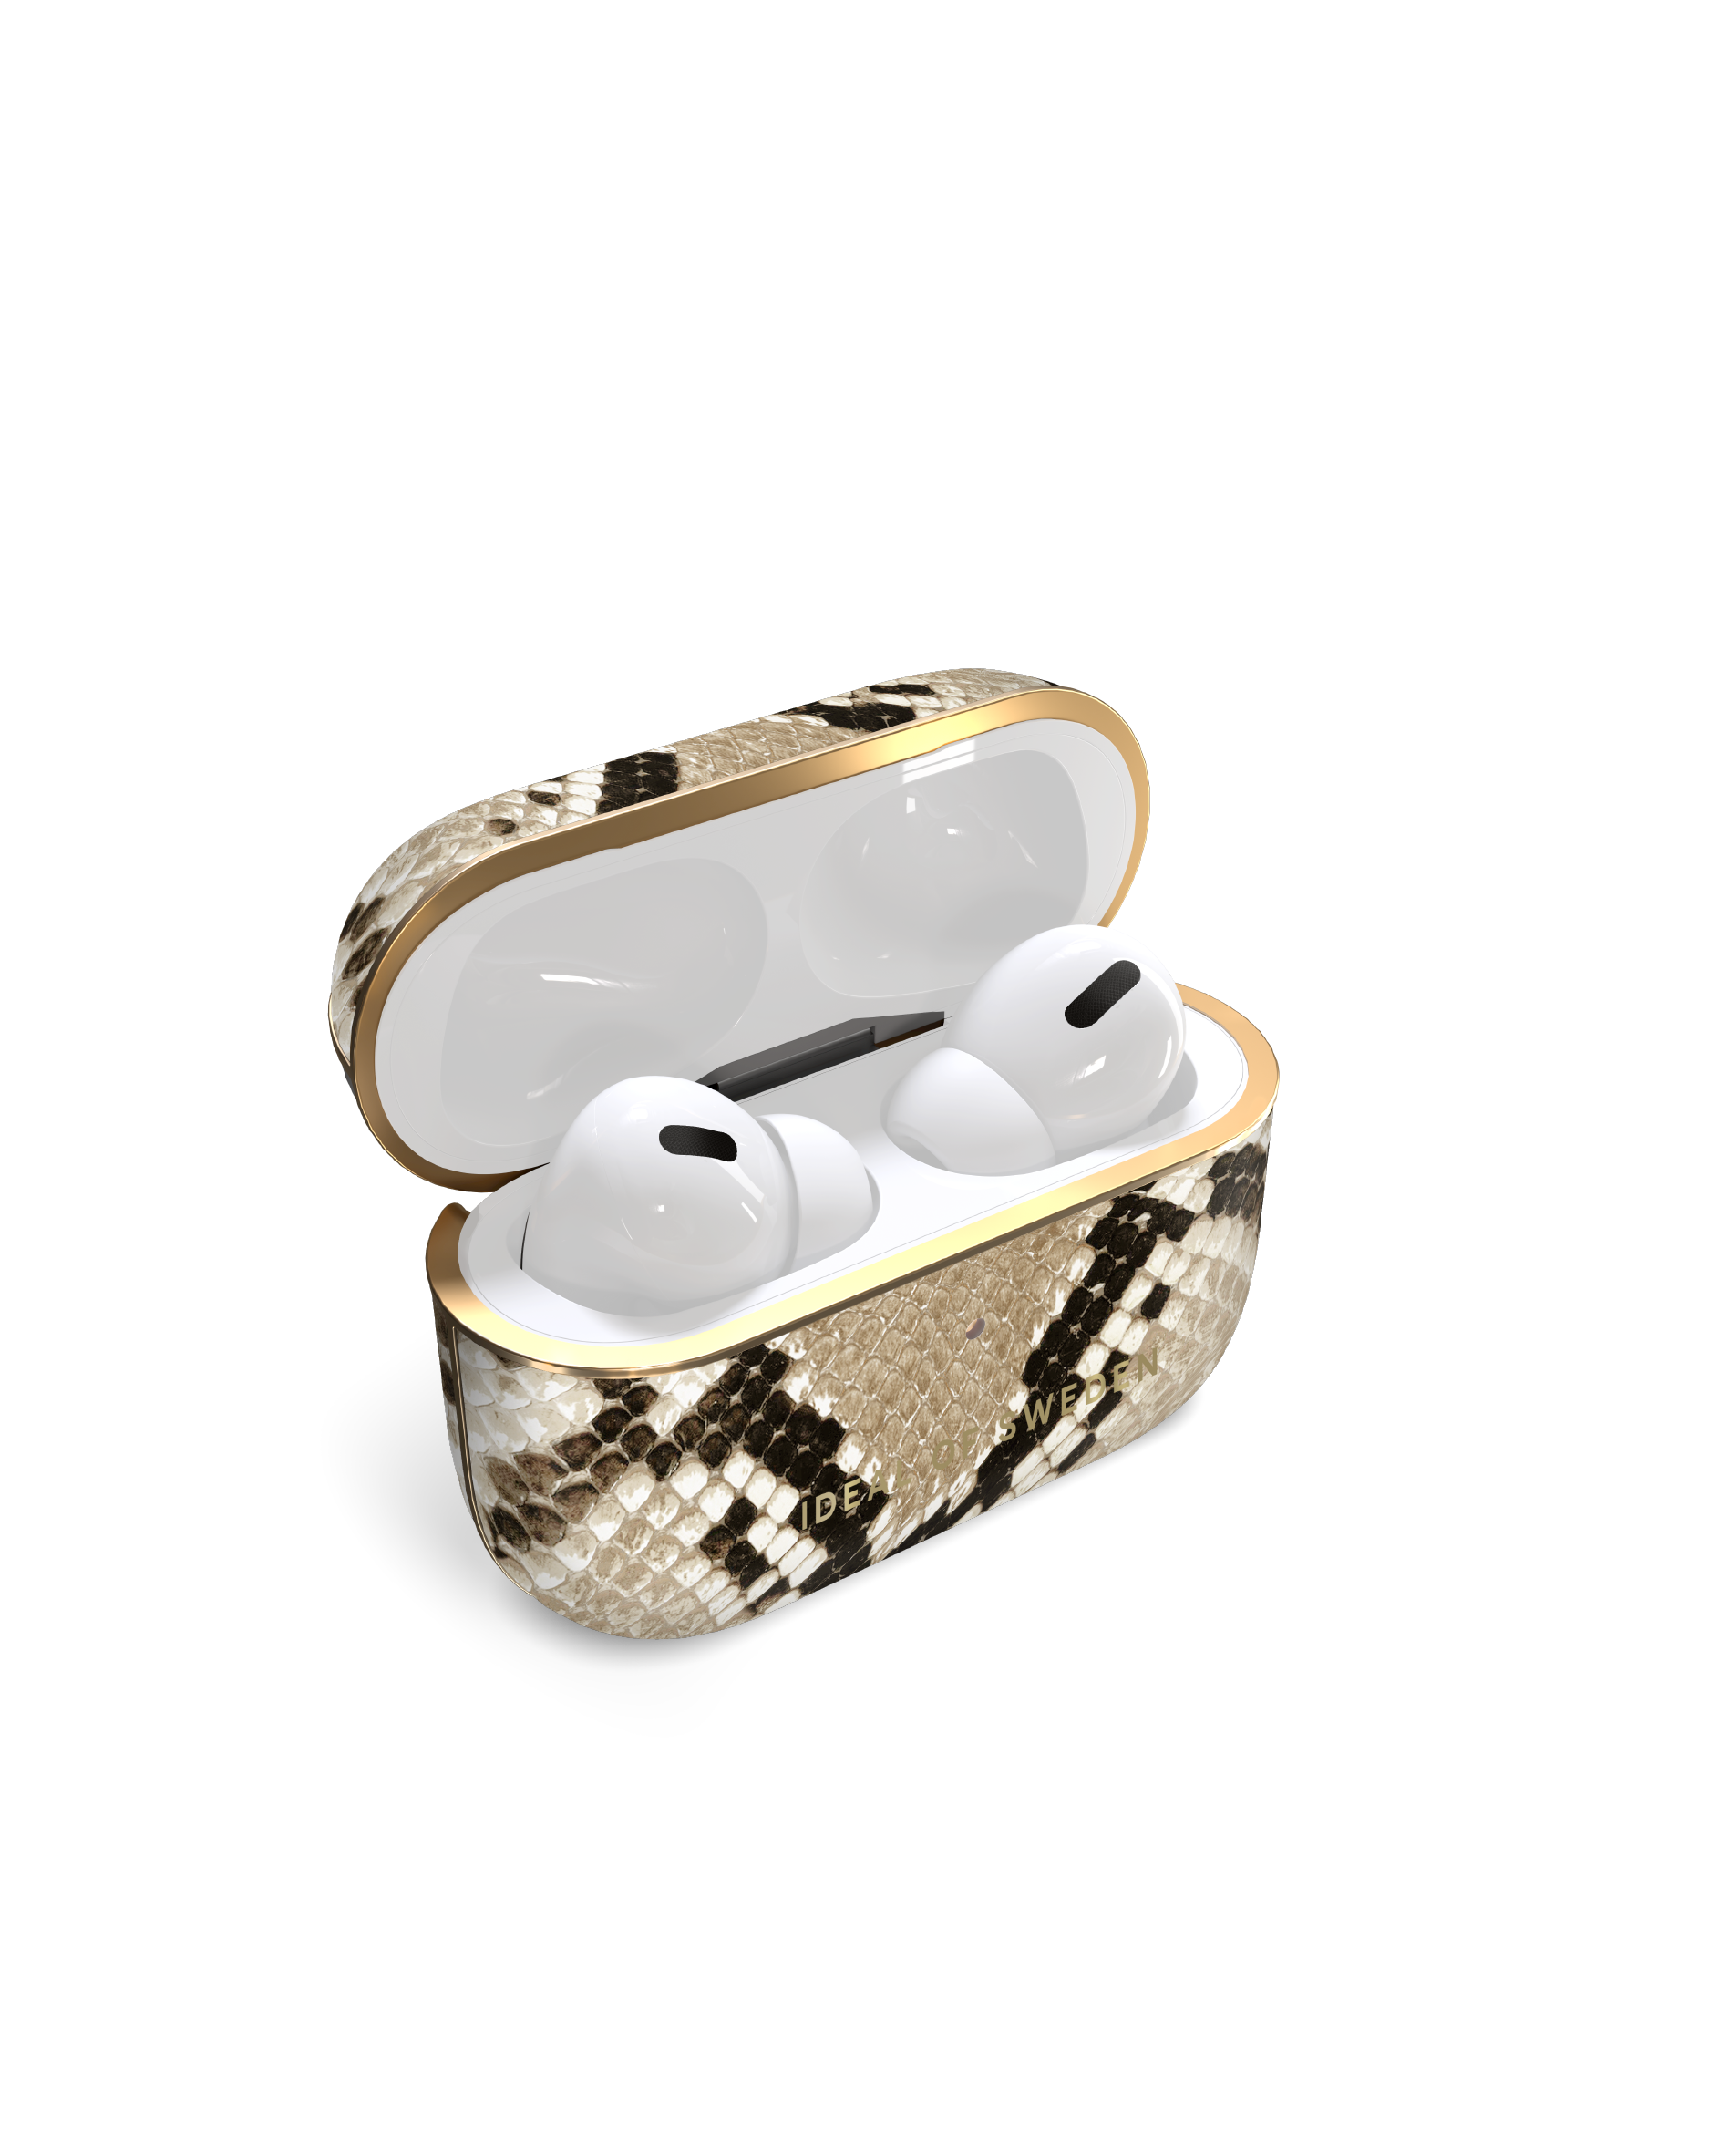 OF AirPod IDEAL für: SWEDEN Cover passend Sahara Snake Full Case IDFAPC-PRO-242 Apple